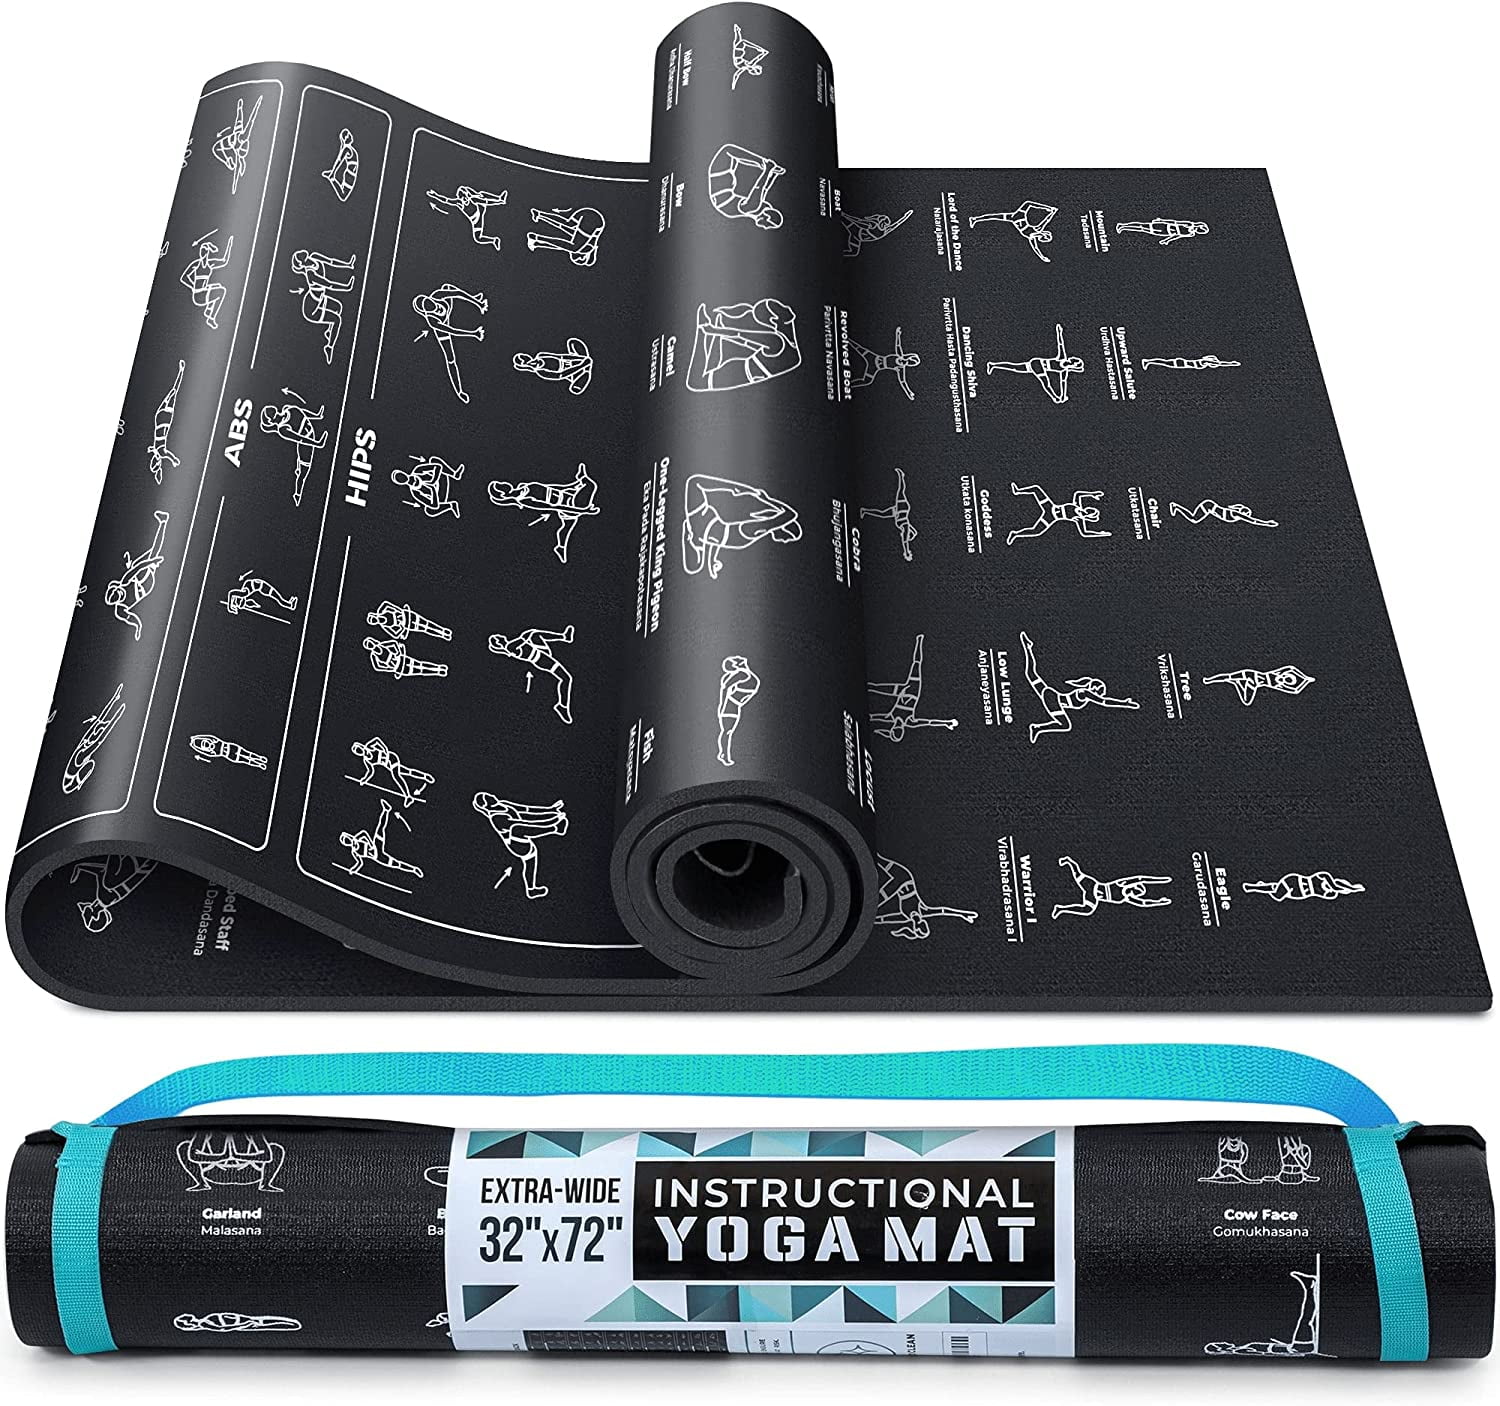 Instructional Yoga Mat/Educational Yoga Mat (Best Yoga Mat for